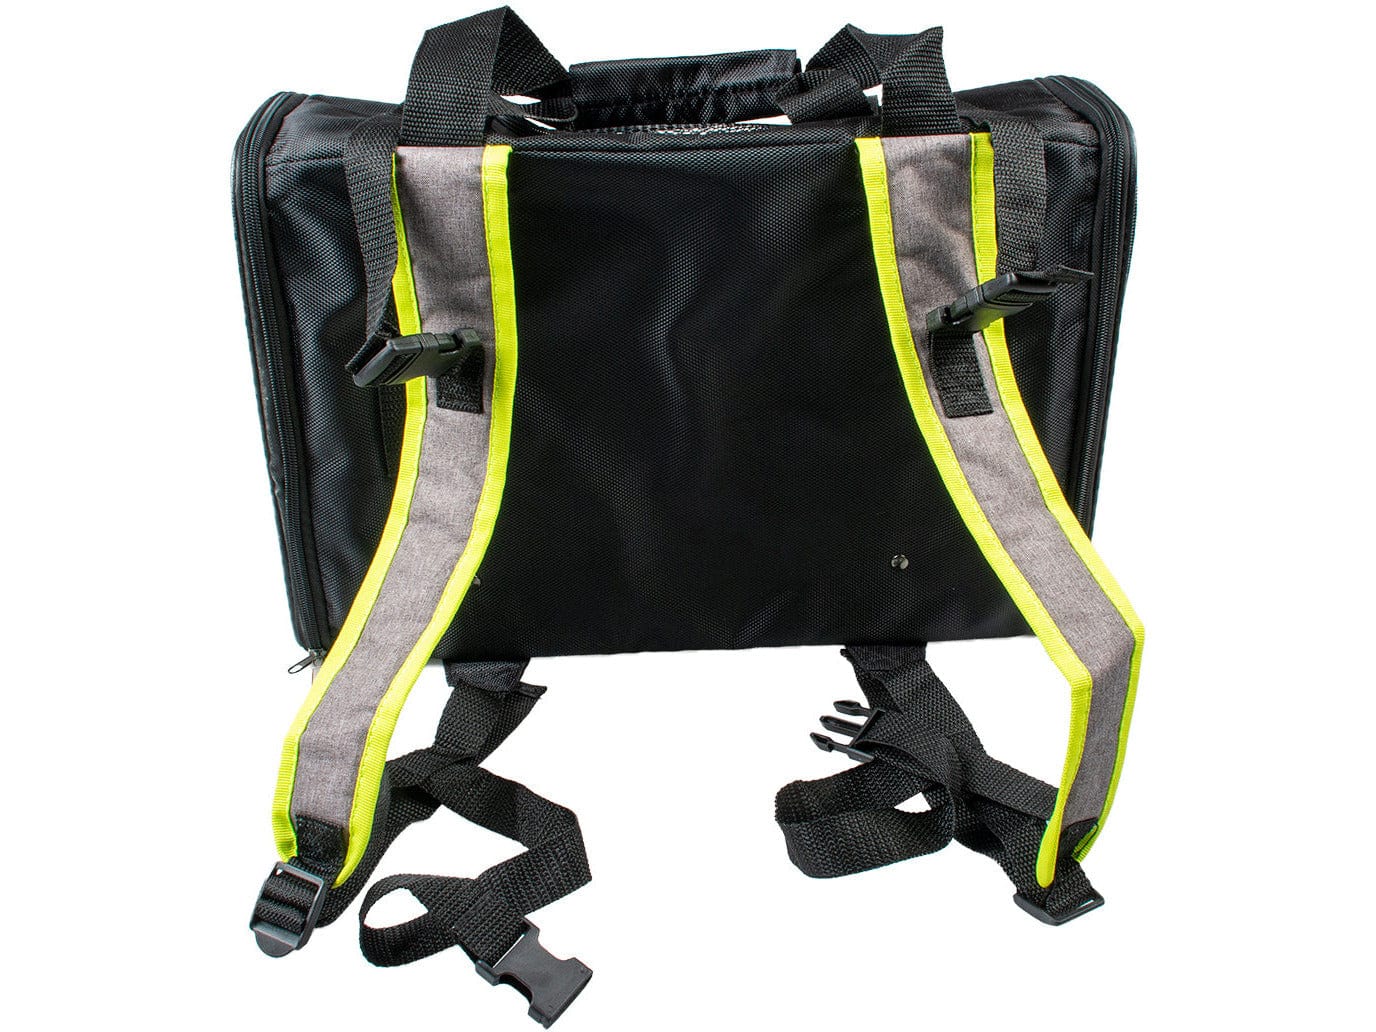 Lyon backpack 43x20x29cm - max. 6kg black